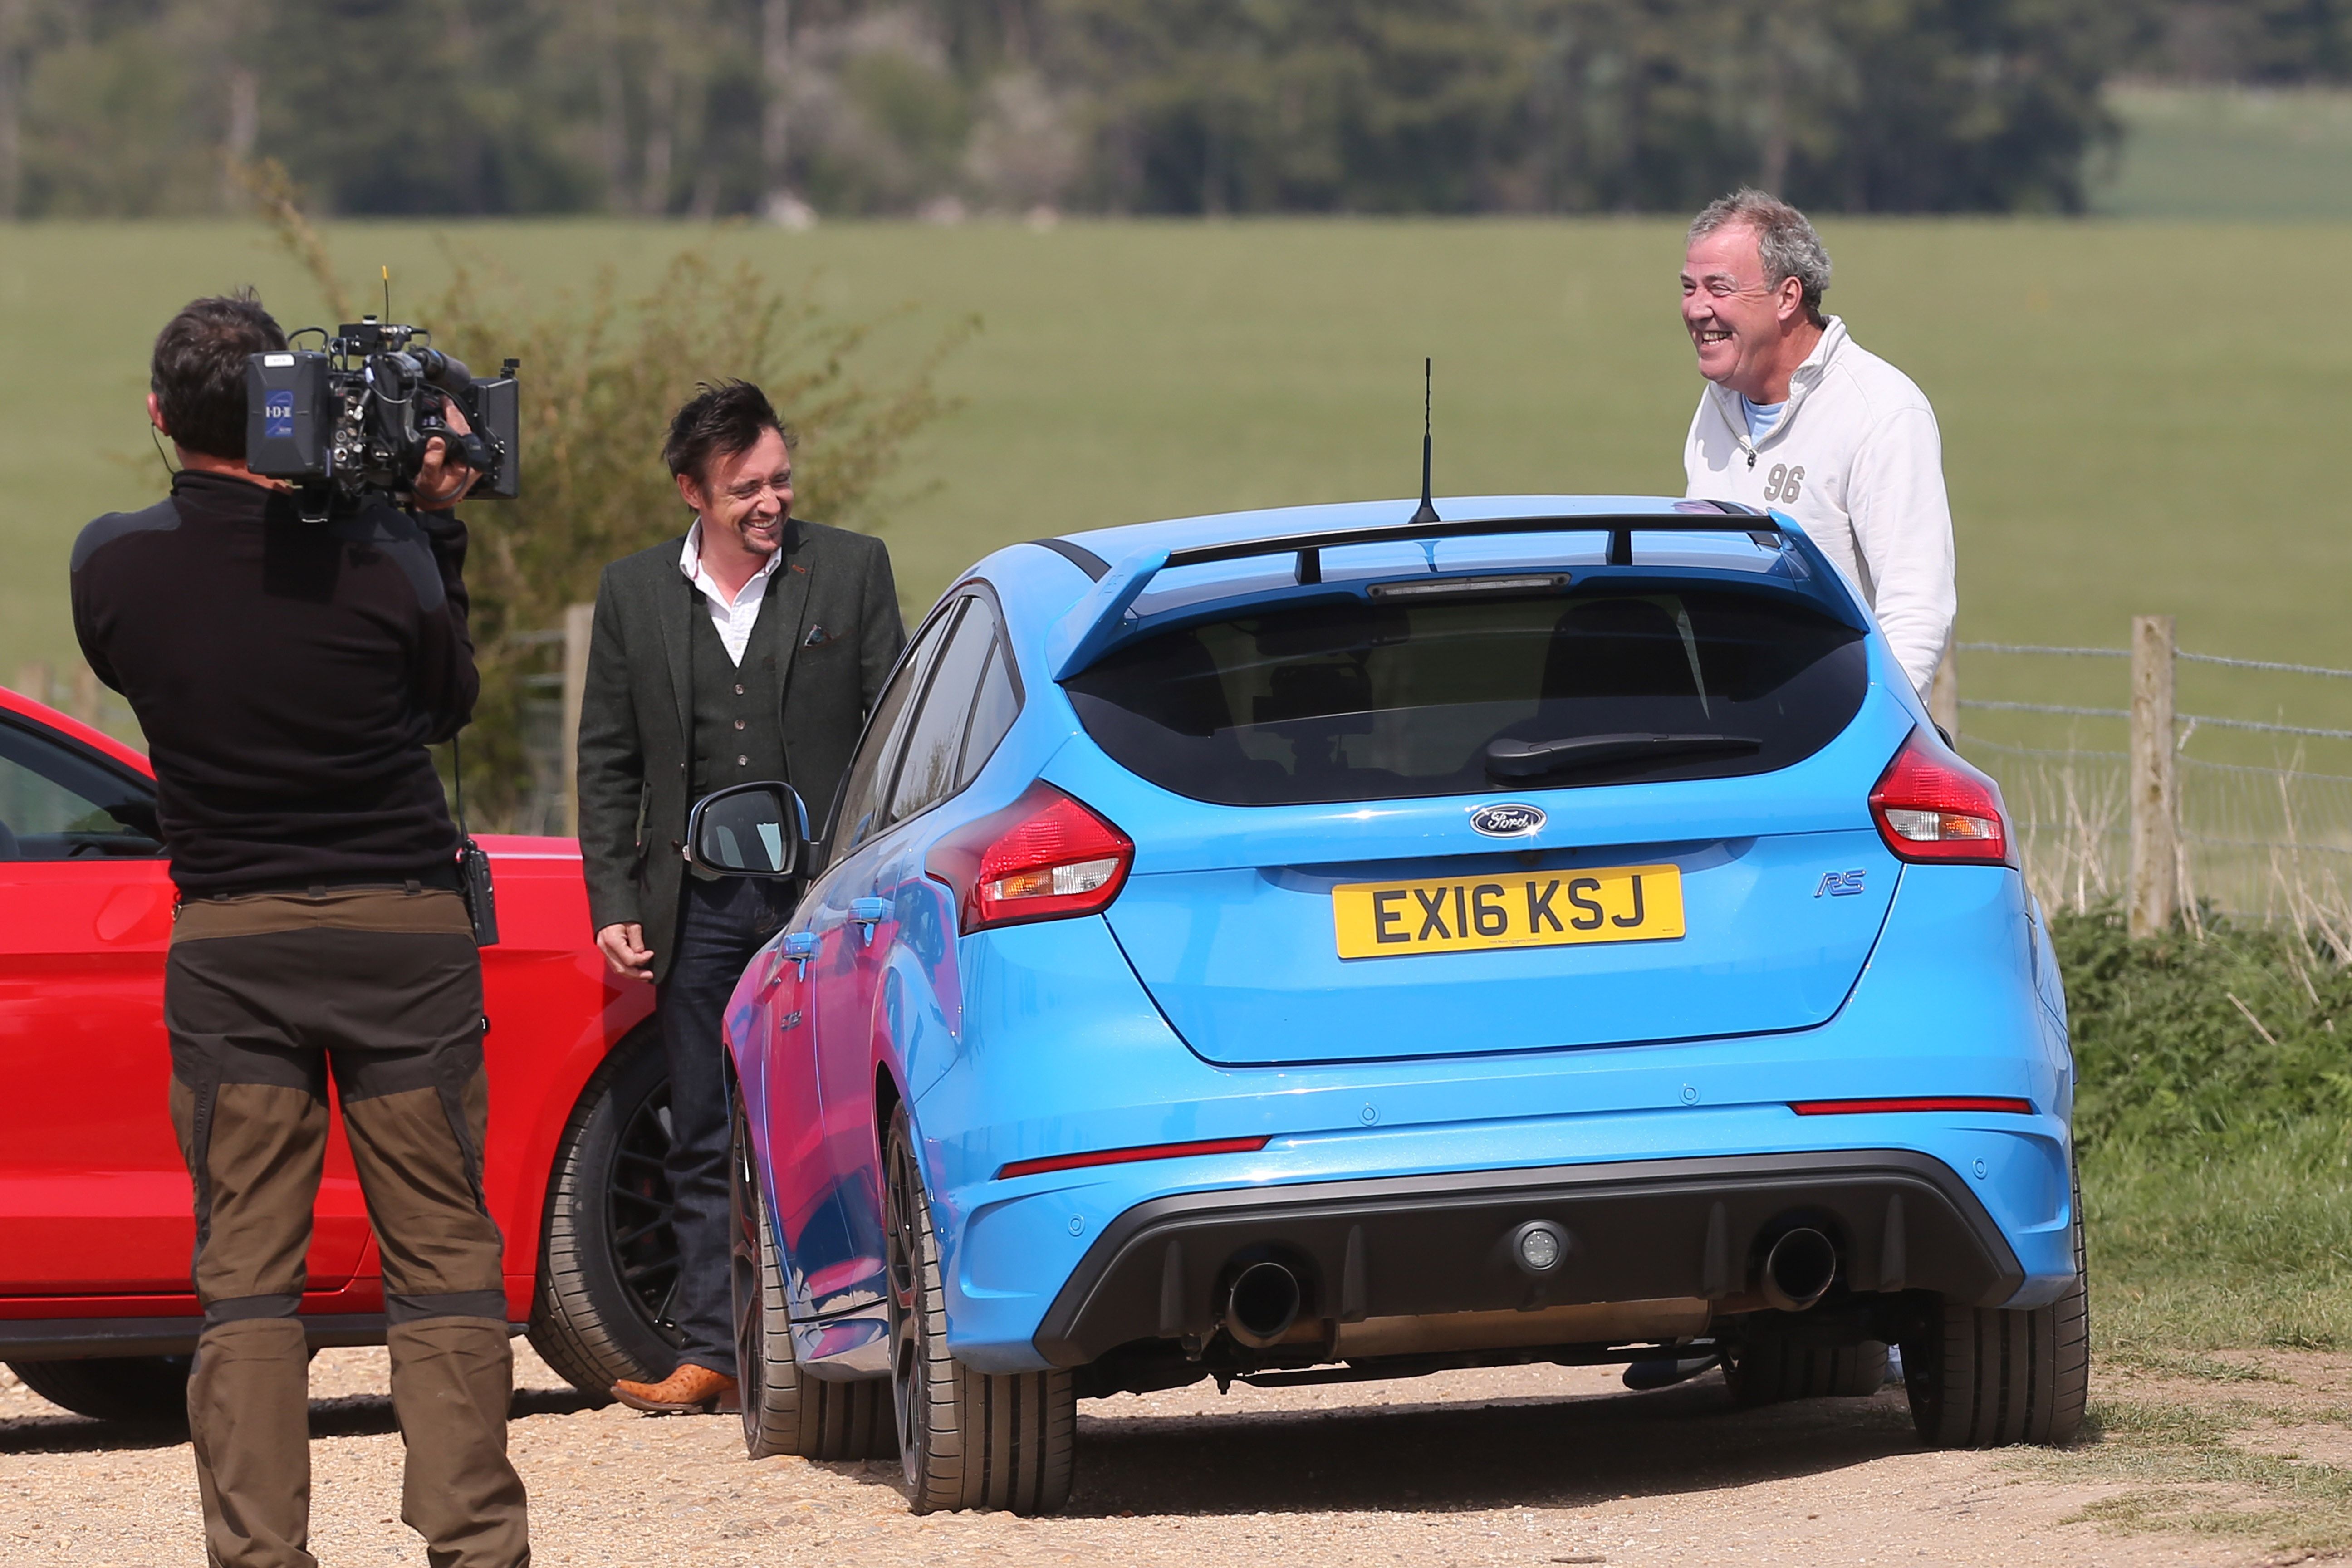 Jeremy Clarkson and Richard race on set of The